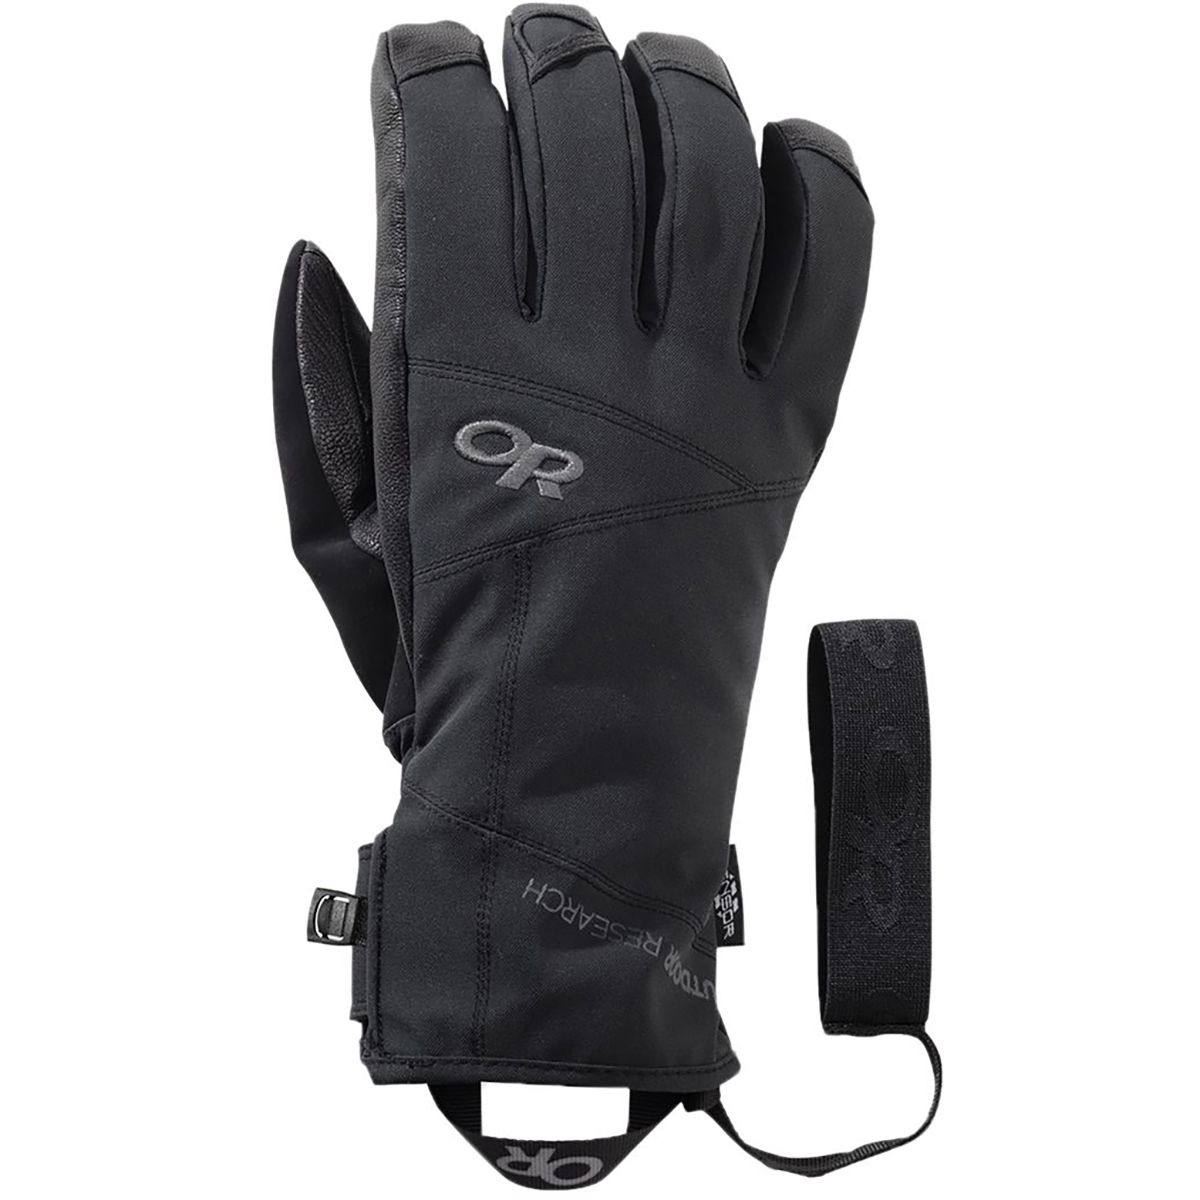 Outdoor Research Illuminator Sensor Glove - Men's